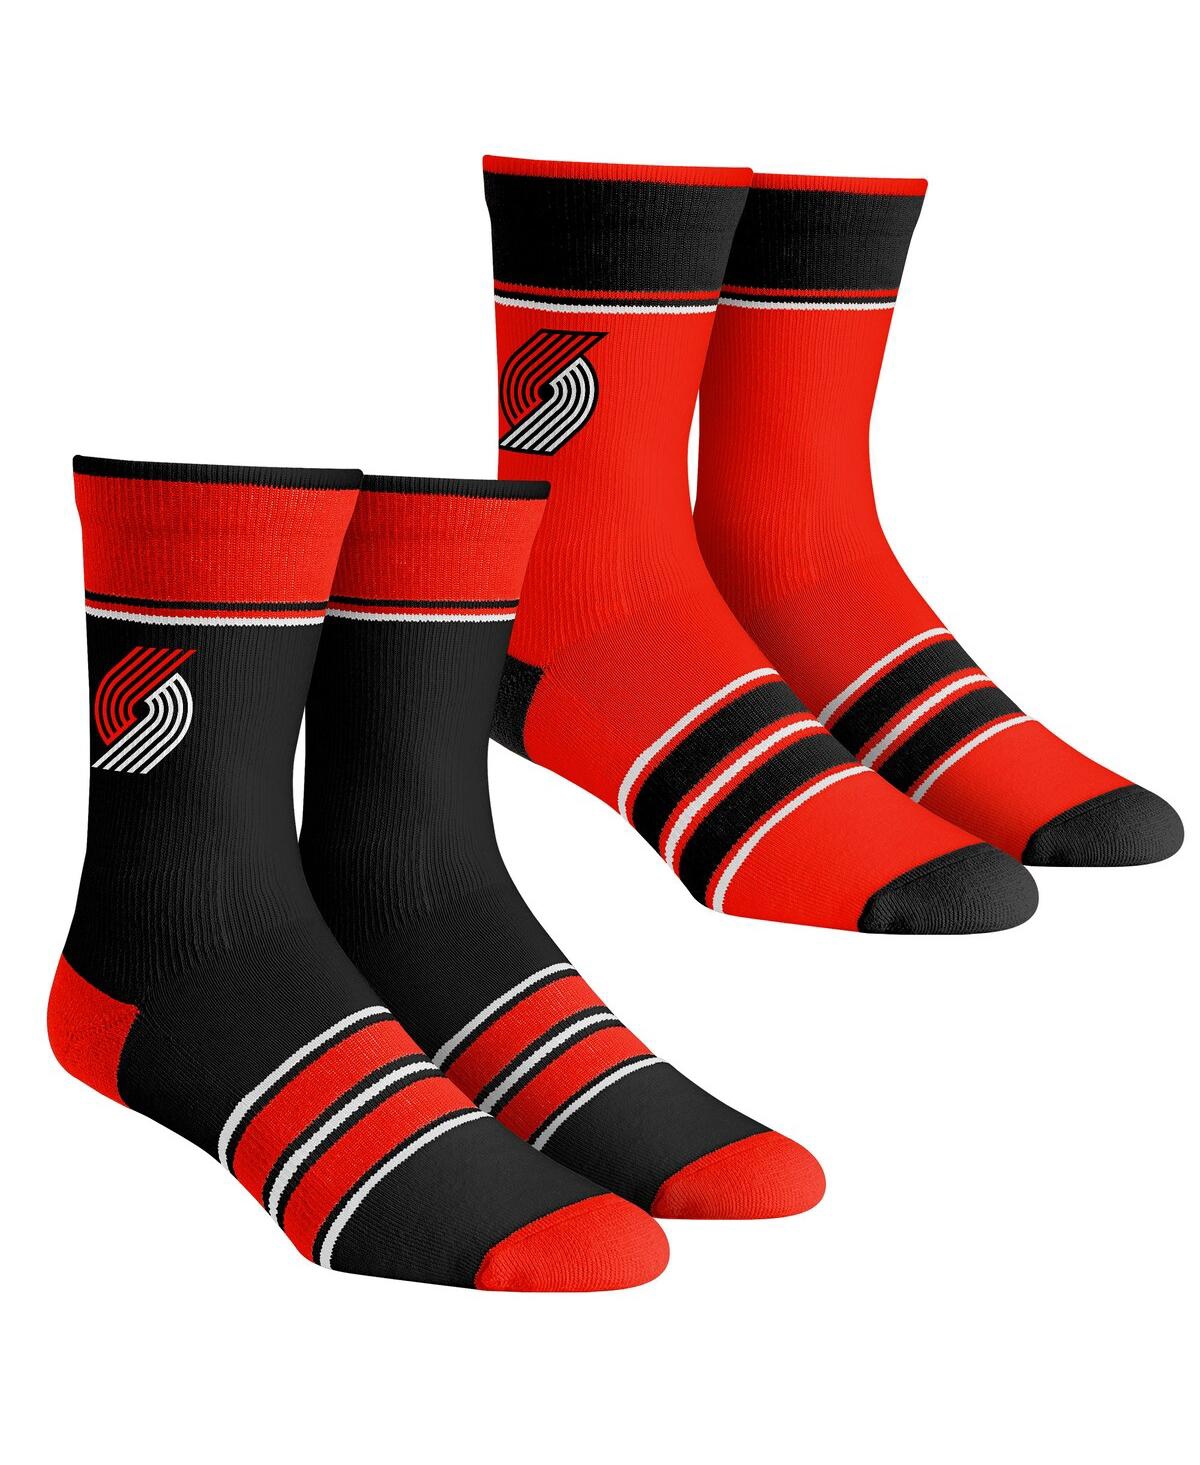 Men's and Women's Rock 'Em Socks Portland Trail Blazers Multi-Stripe 2-Pack Team Crew Sock Set - Multi